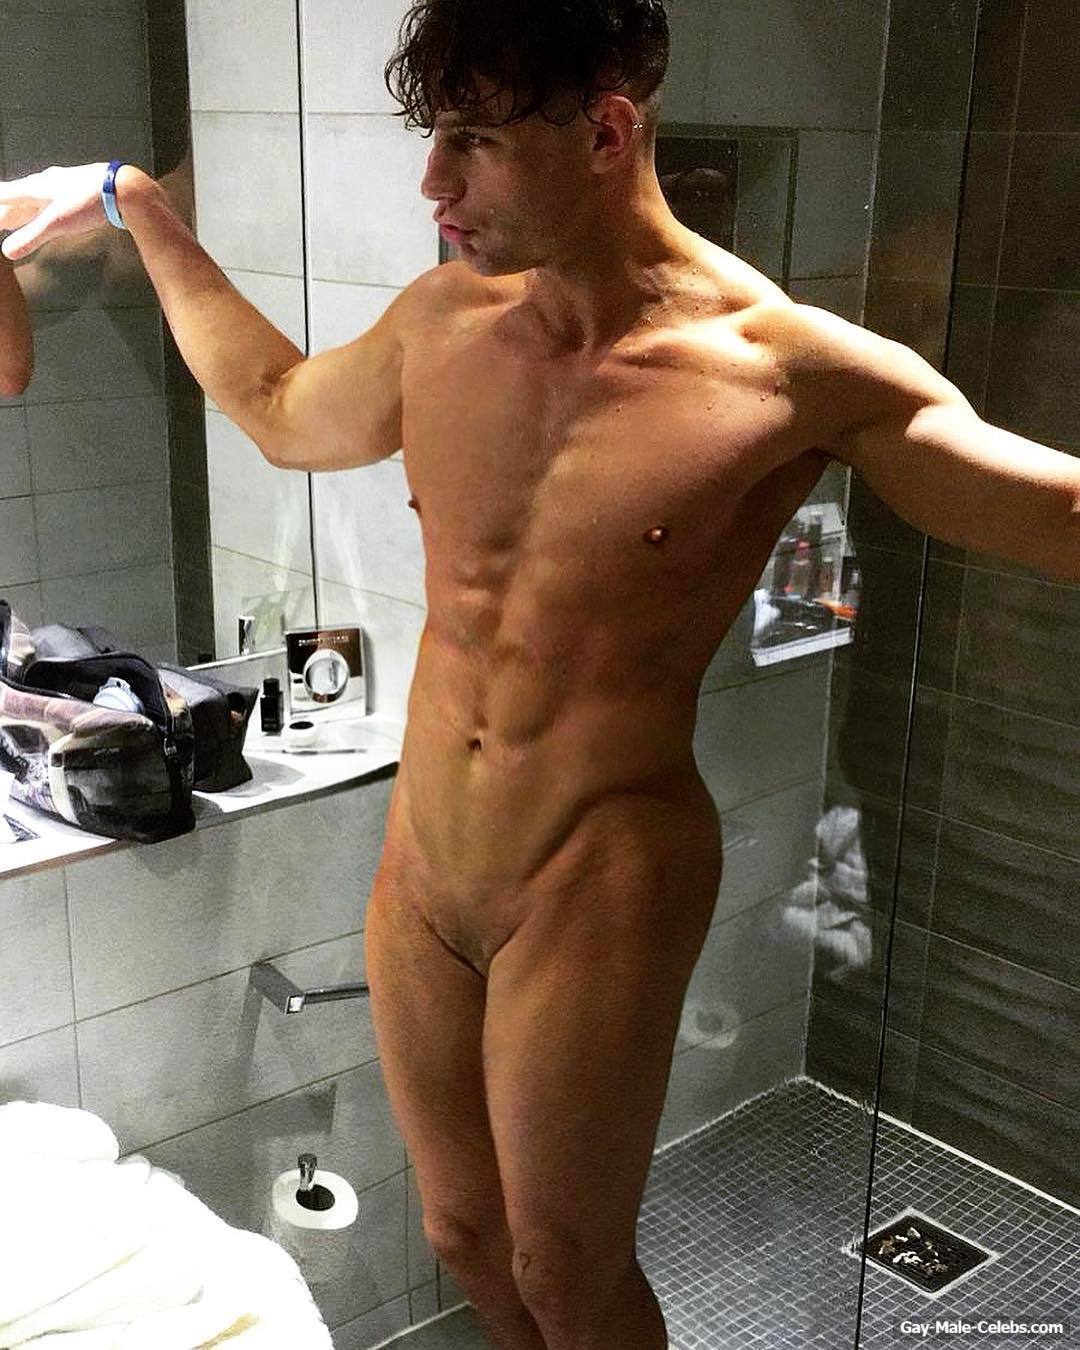 British Reality TV Personality Scott Timlin Nude And Sexy